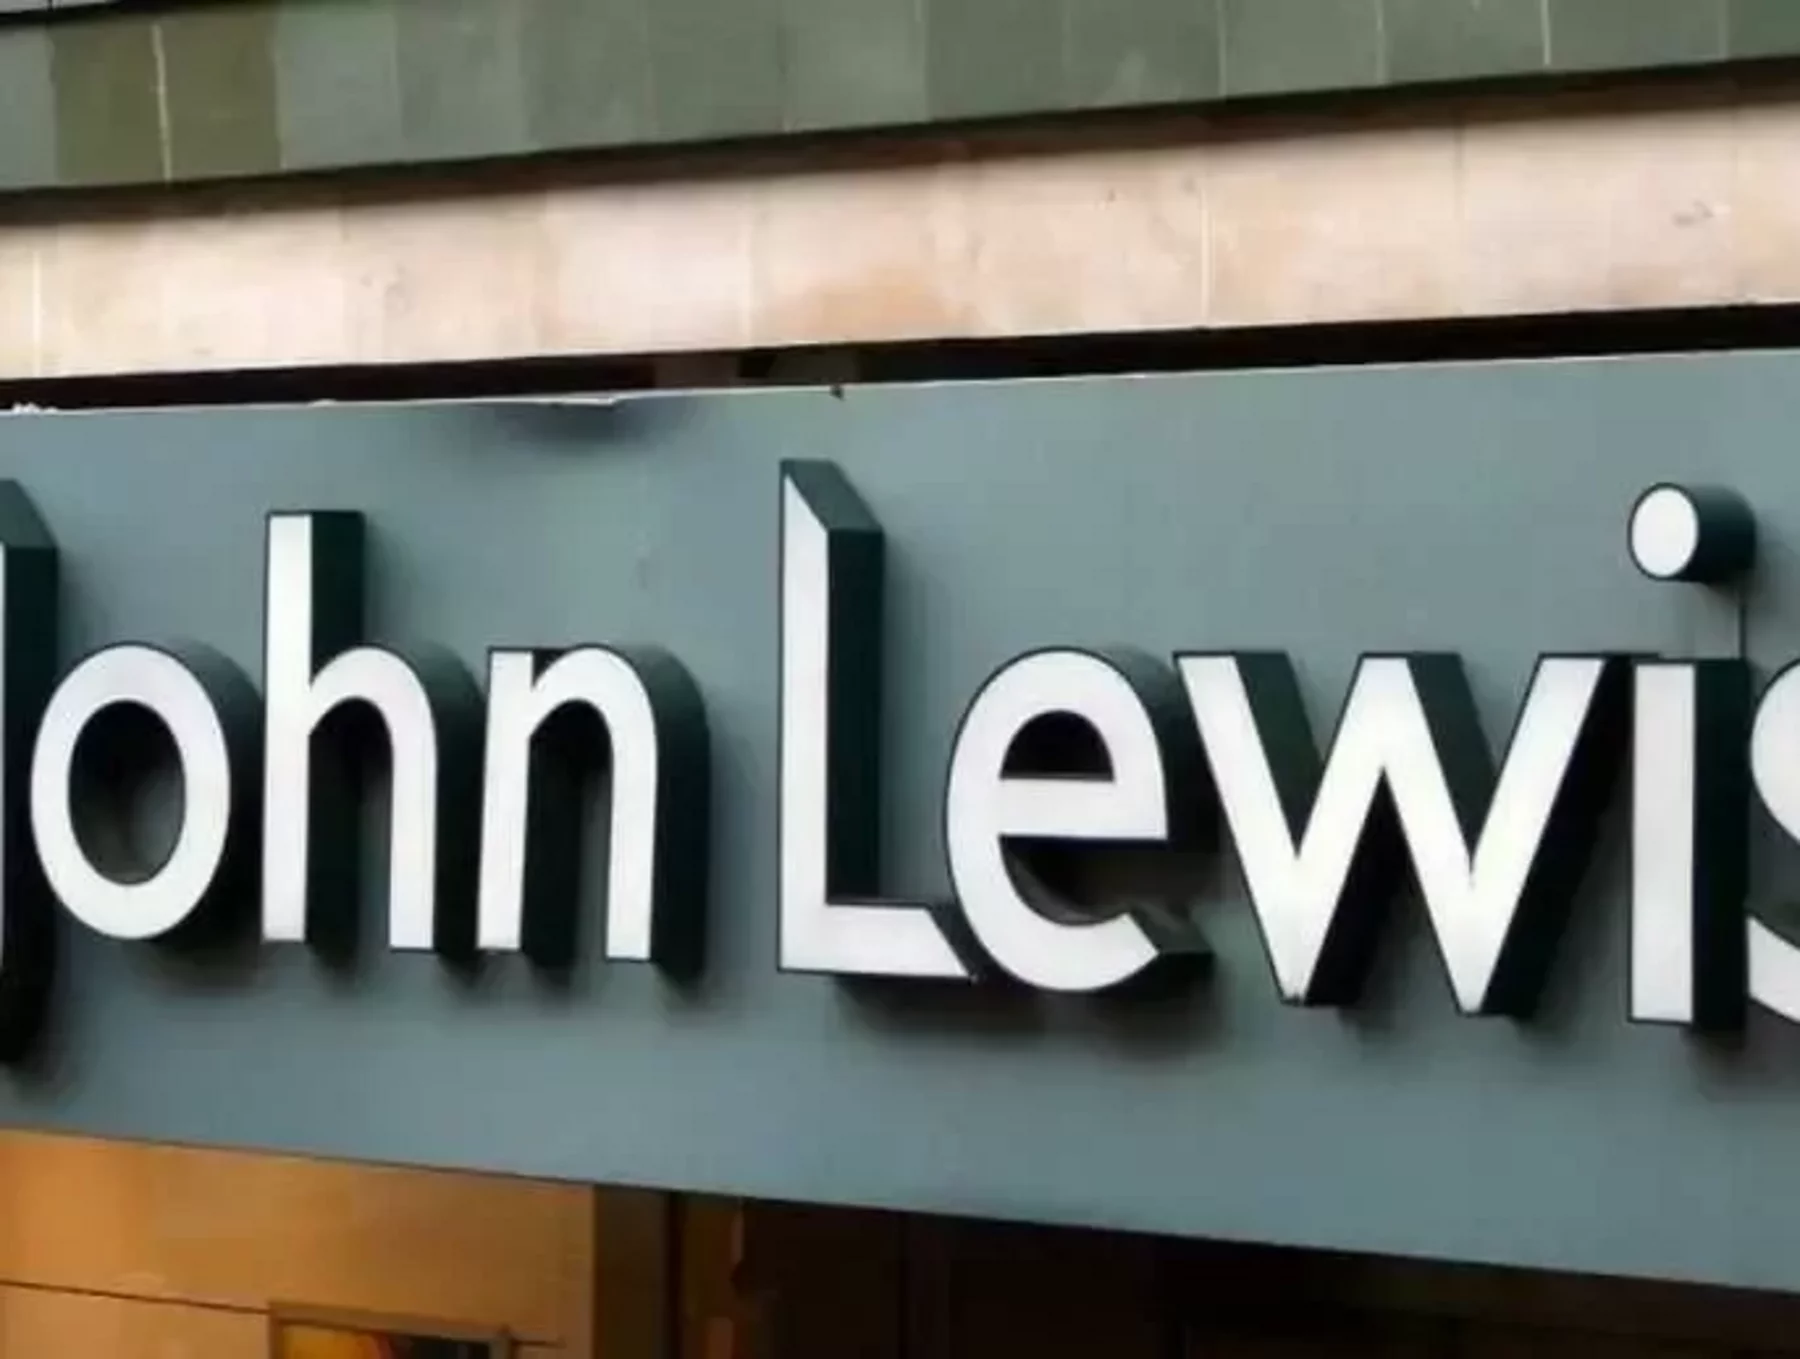 John Lewis's greatest challenge - the omni channel customer